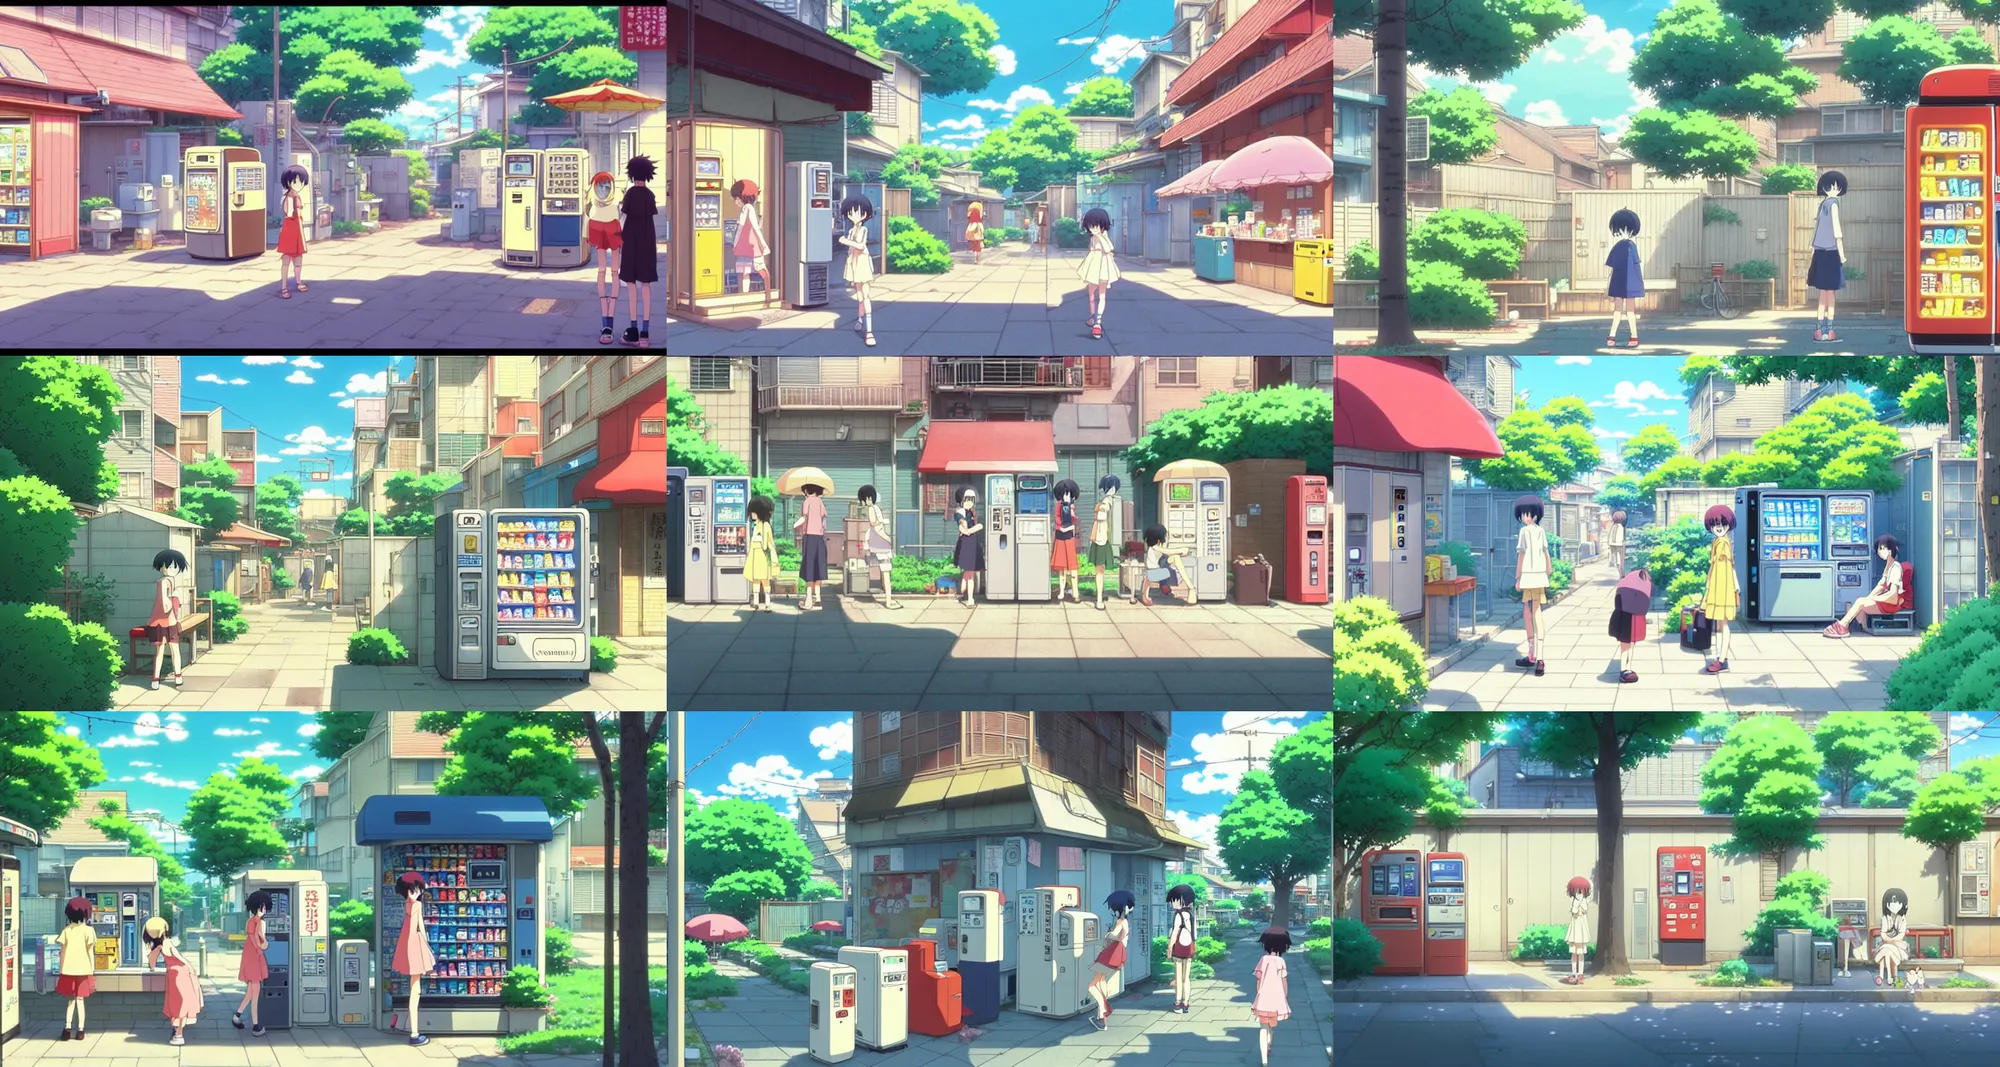 Prompt: beautiful slice of life anime scene of suburban alleyway, vending machine, summer, relaxing, calm, cozy, peaceful, by mamoru hosoda, hayao miyazaki, makoto shinkai